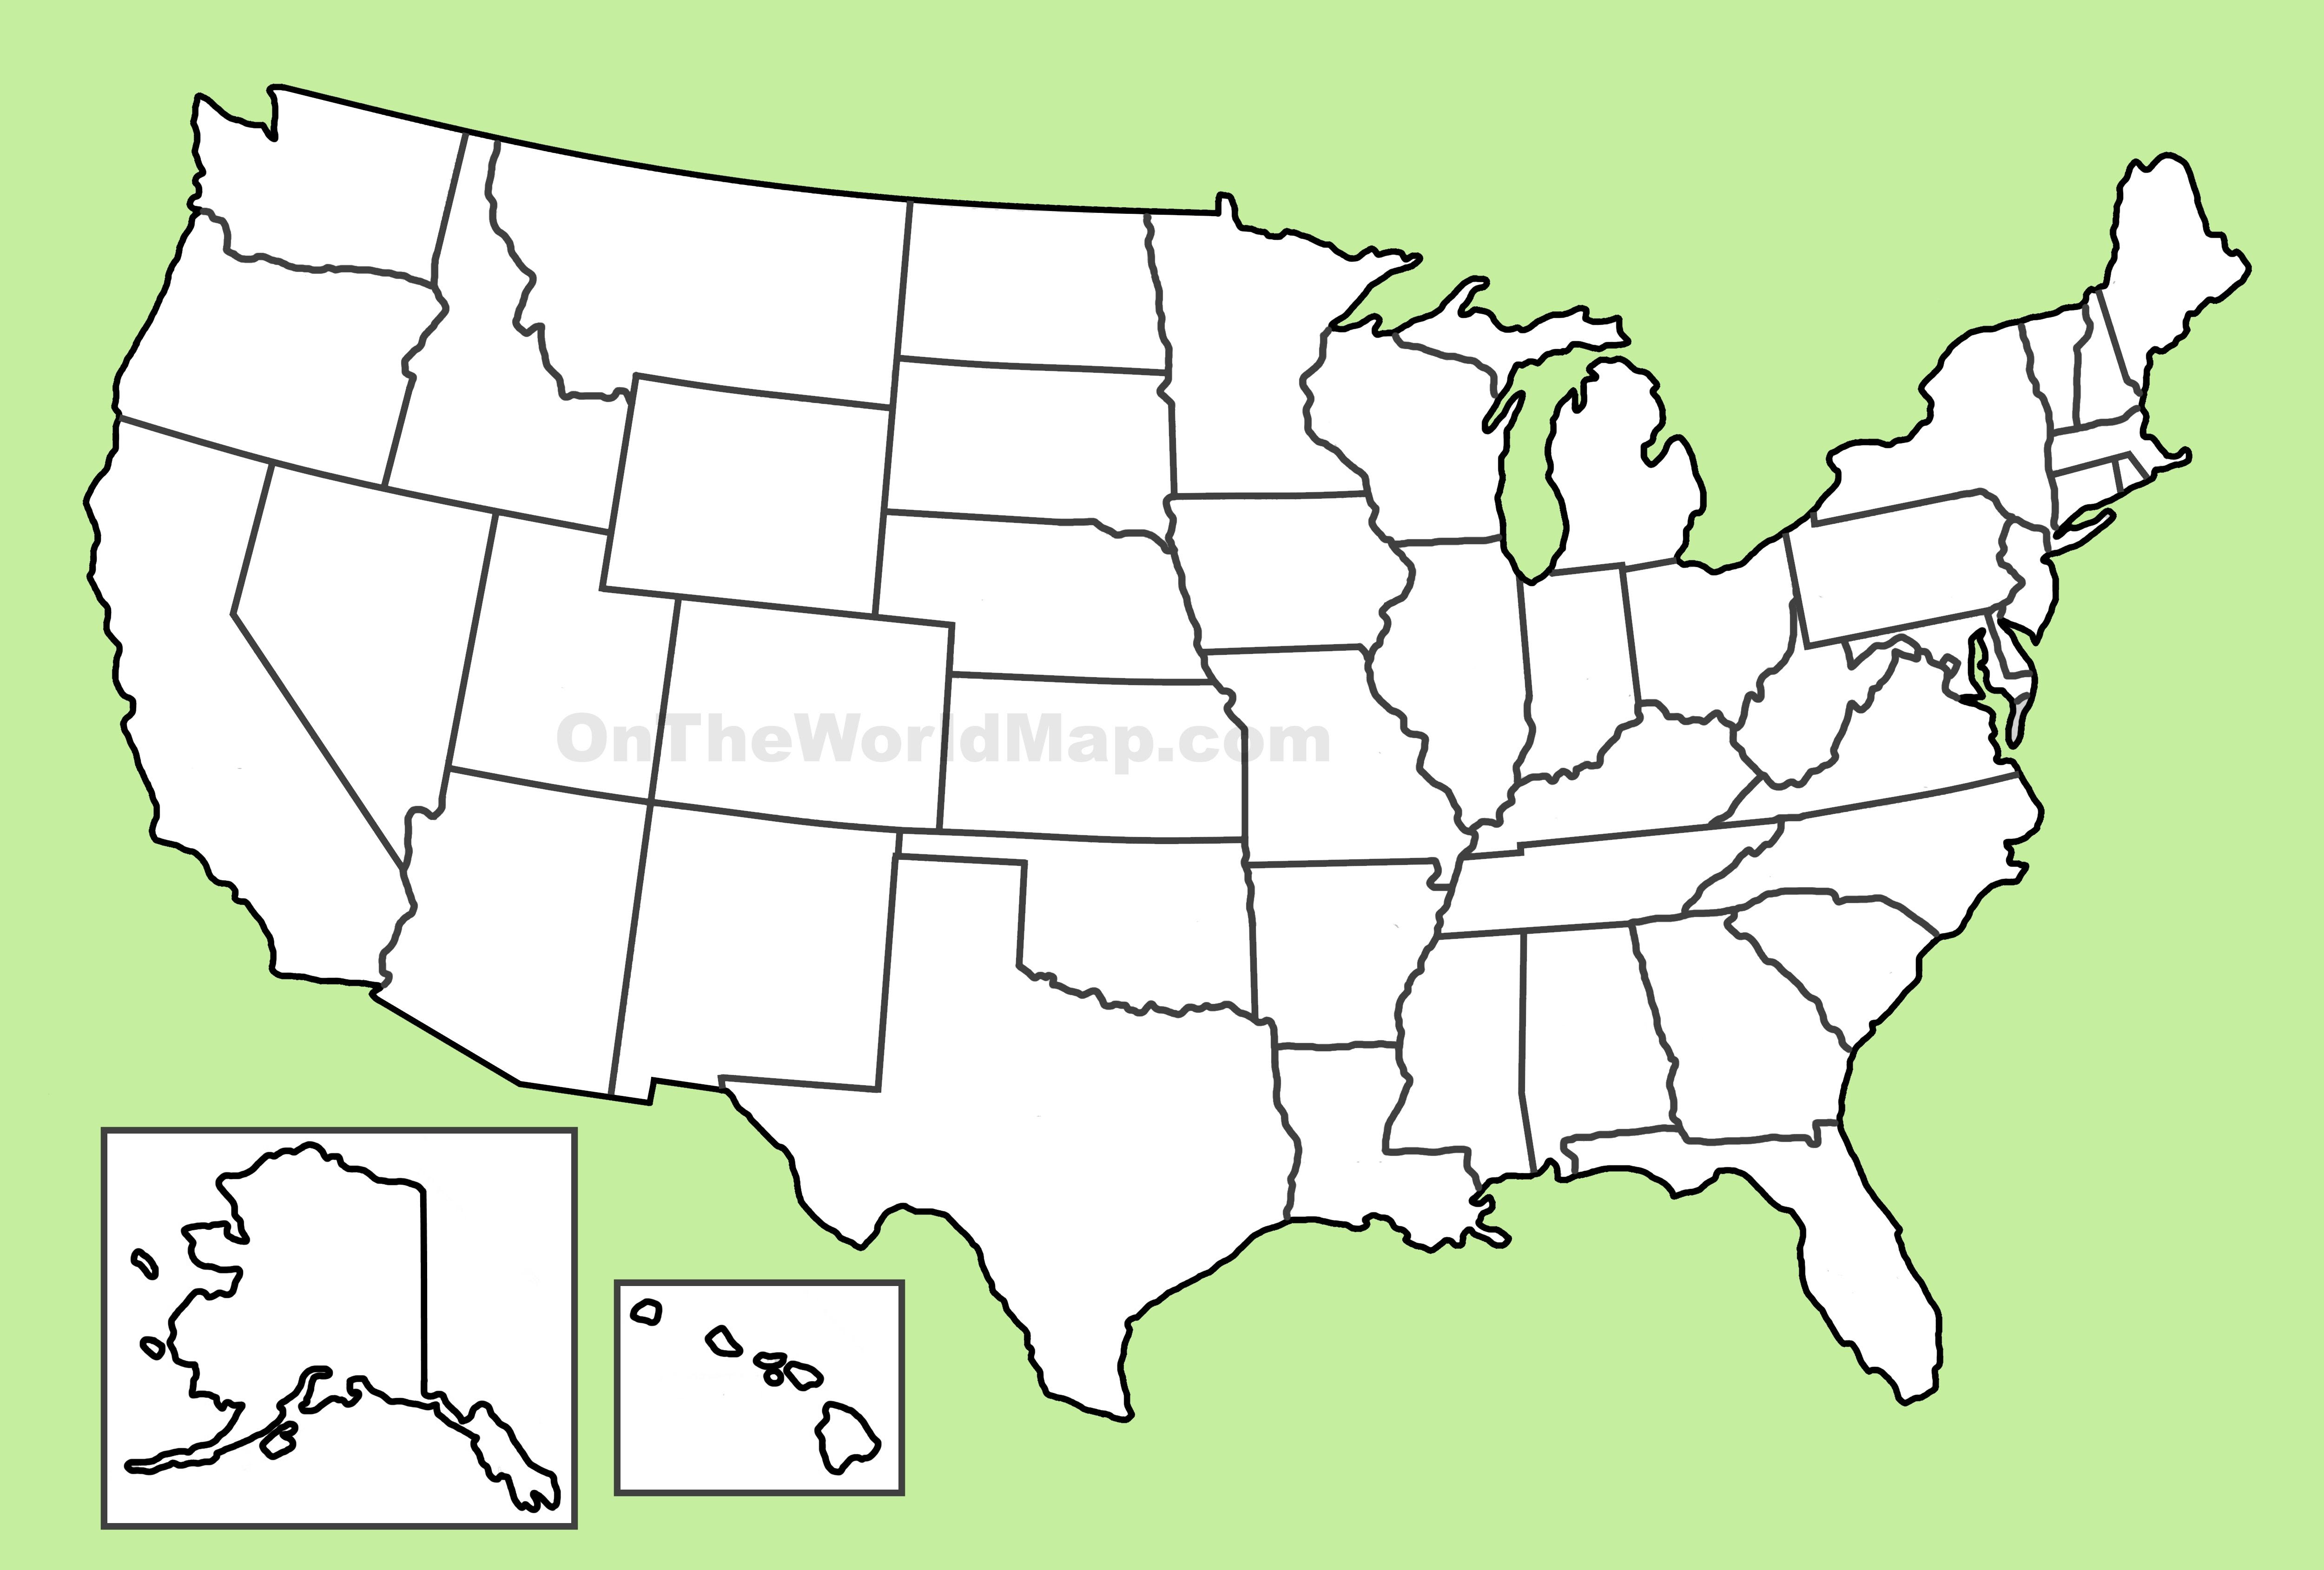 He states that. Карта Штатов США пустая. Карта США со Штатами белая. Карта США без Штатов. Карта Штатов США без названий.